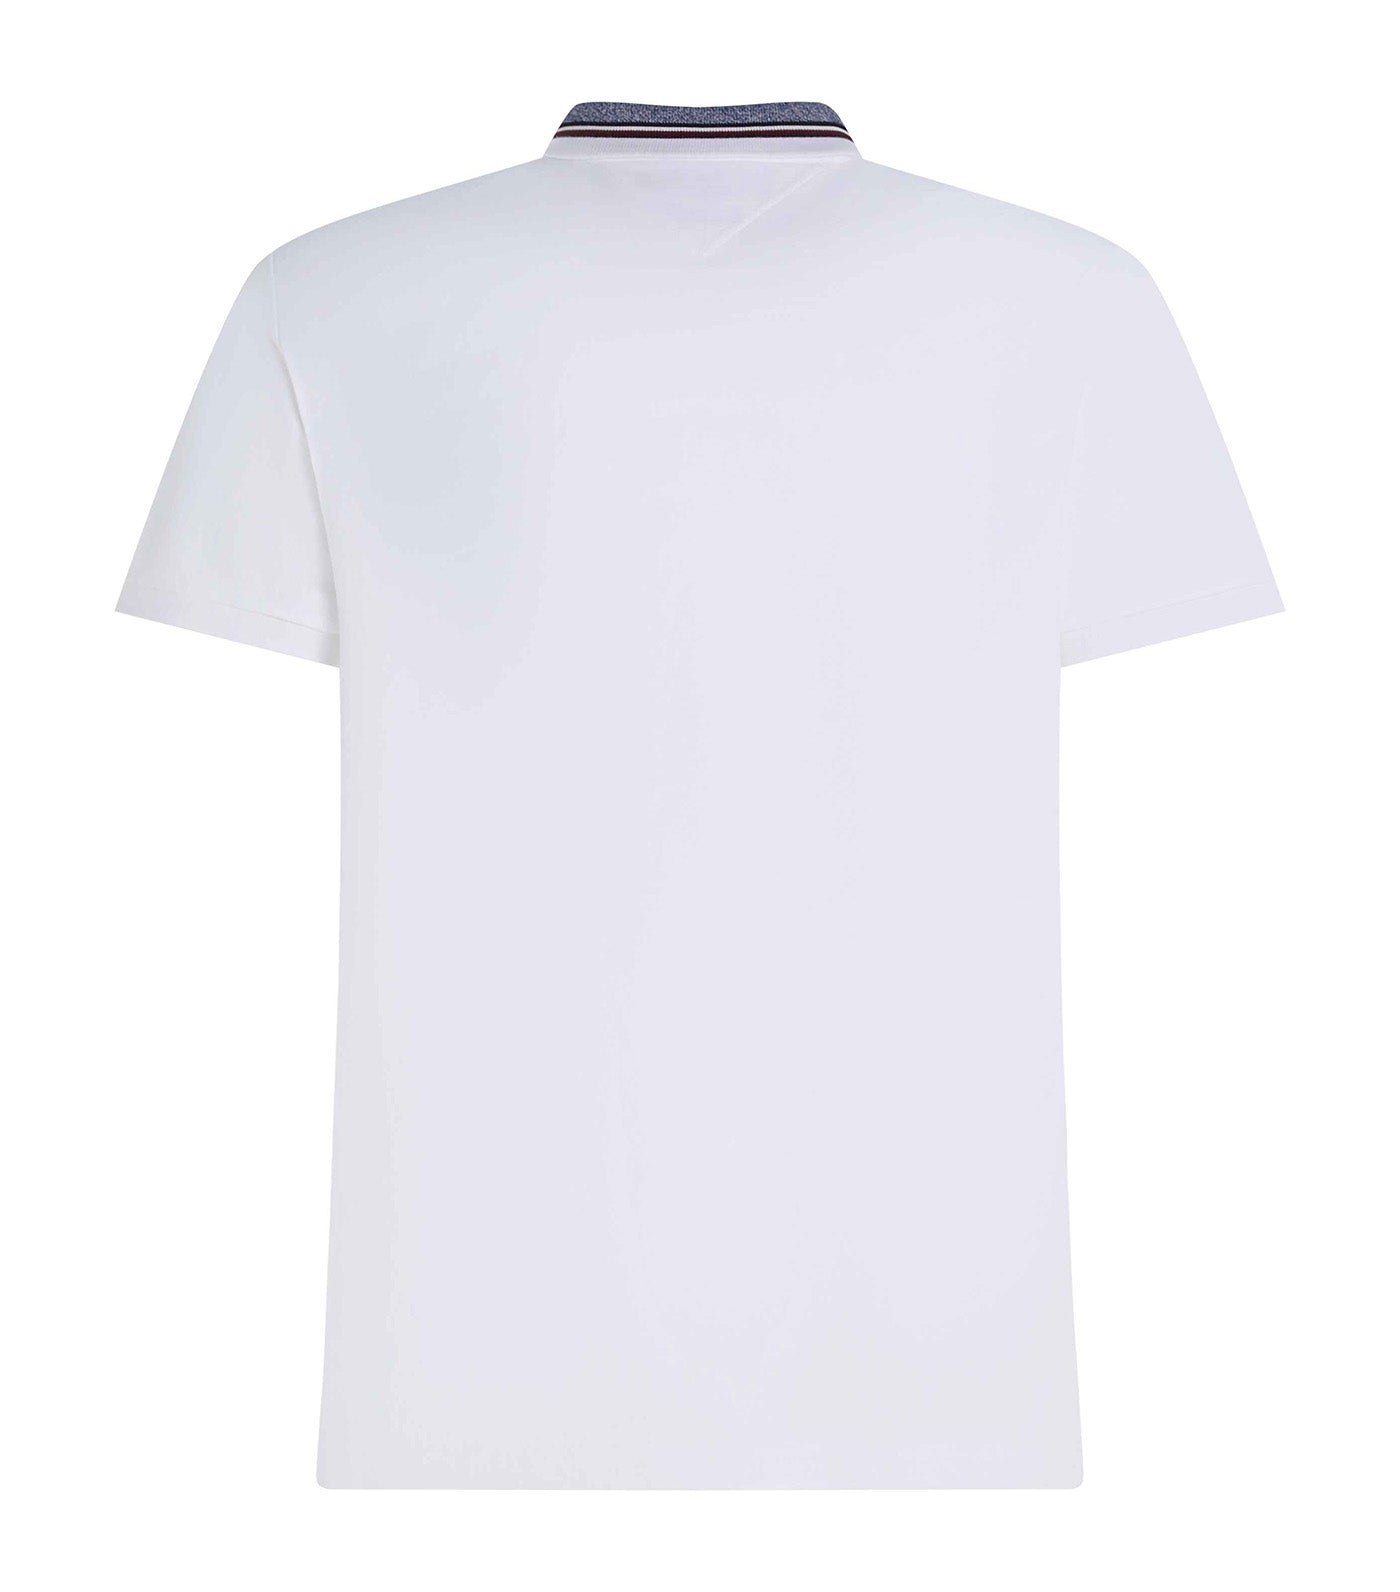 Tommy Hilfiger Men's WCC Mouline Collar Regular Polo Shirt White